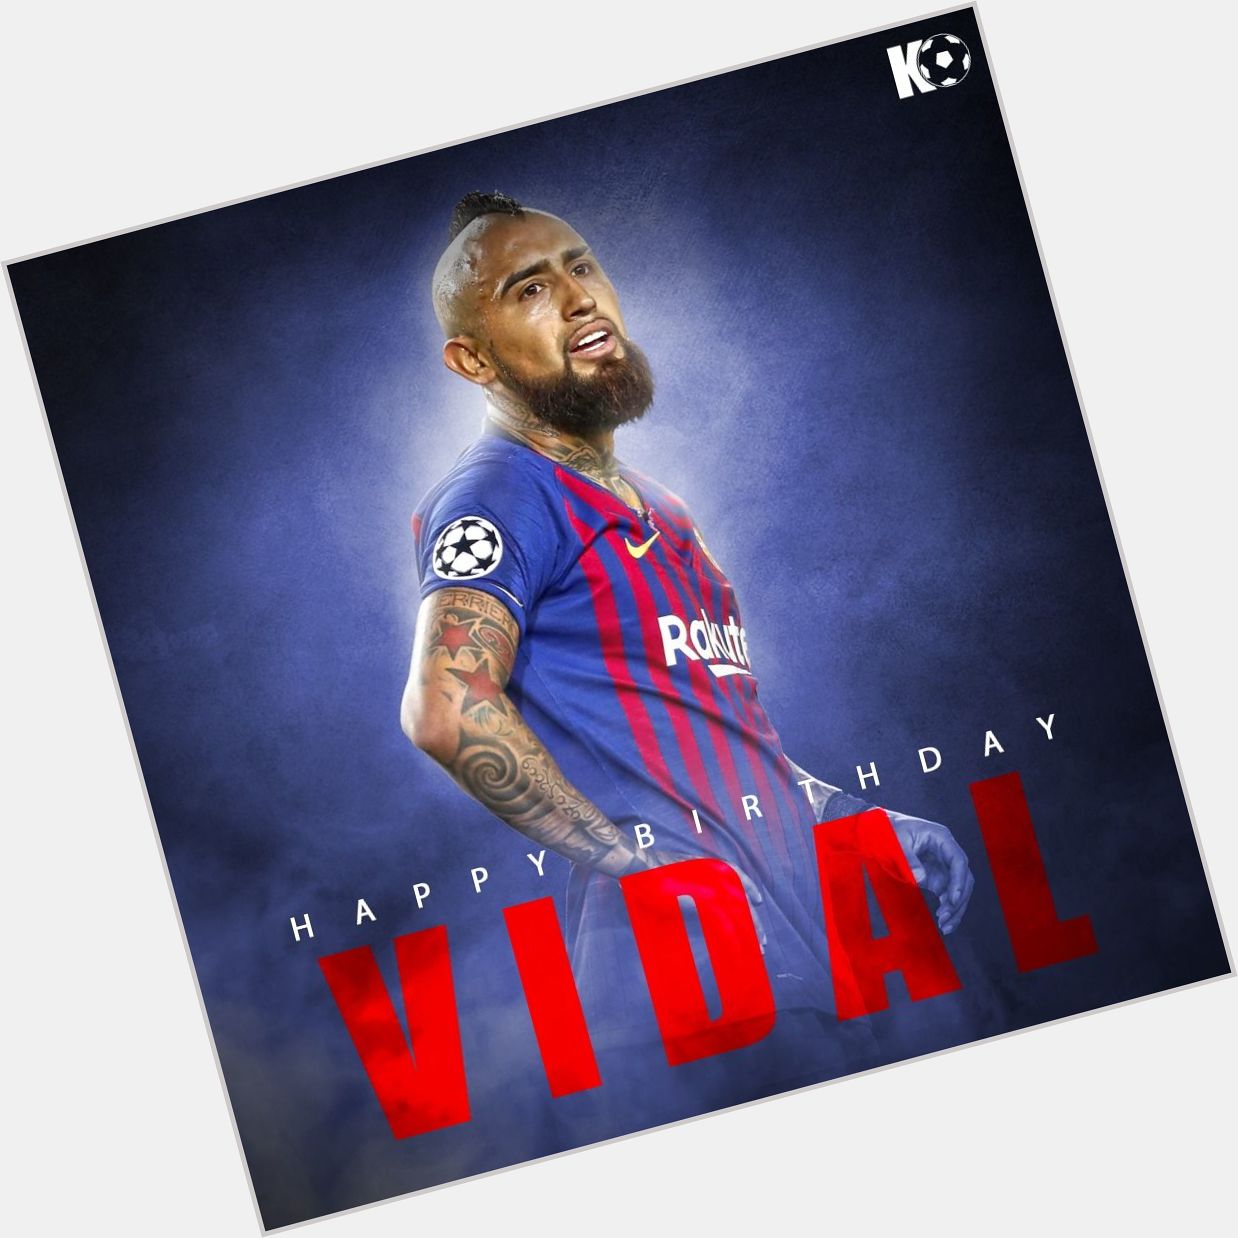 Join in wishing Arturo Vidal a Happy Birthday! 